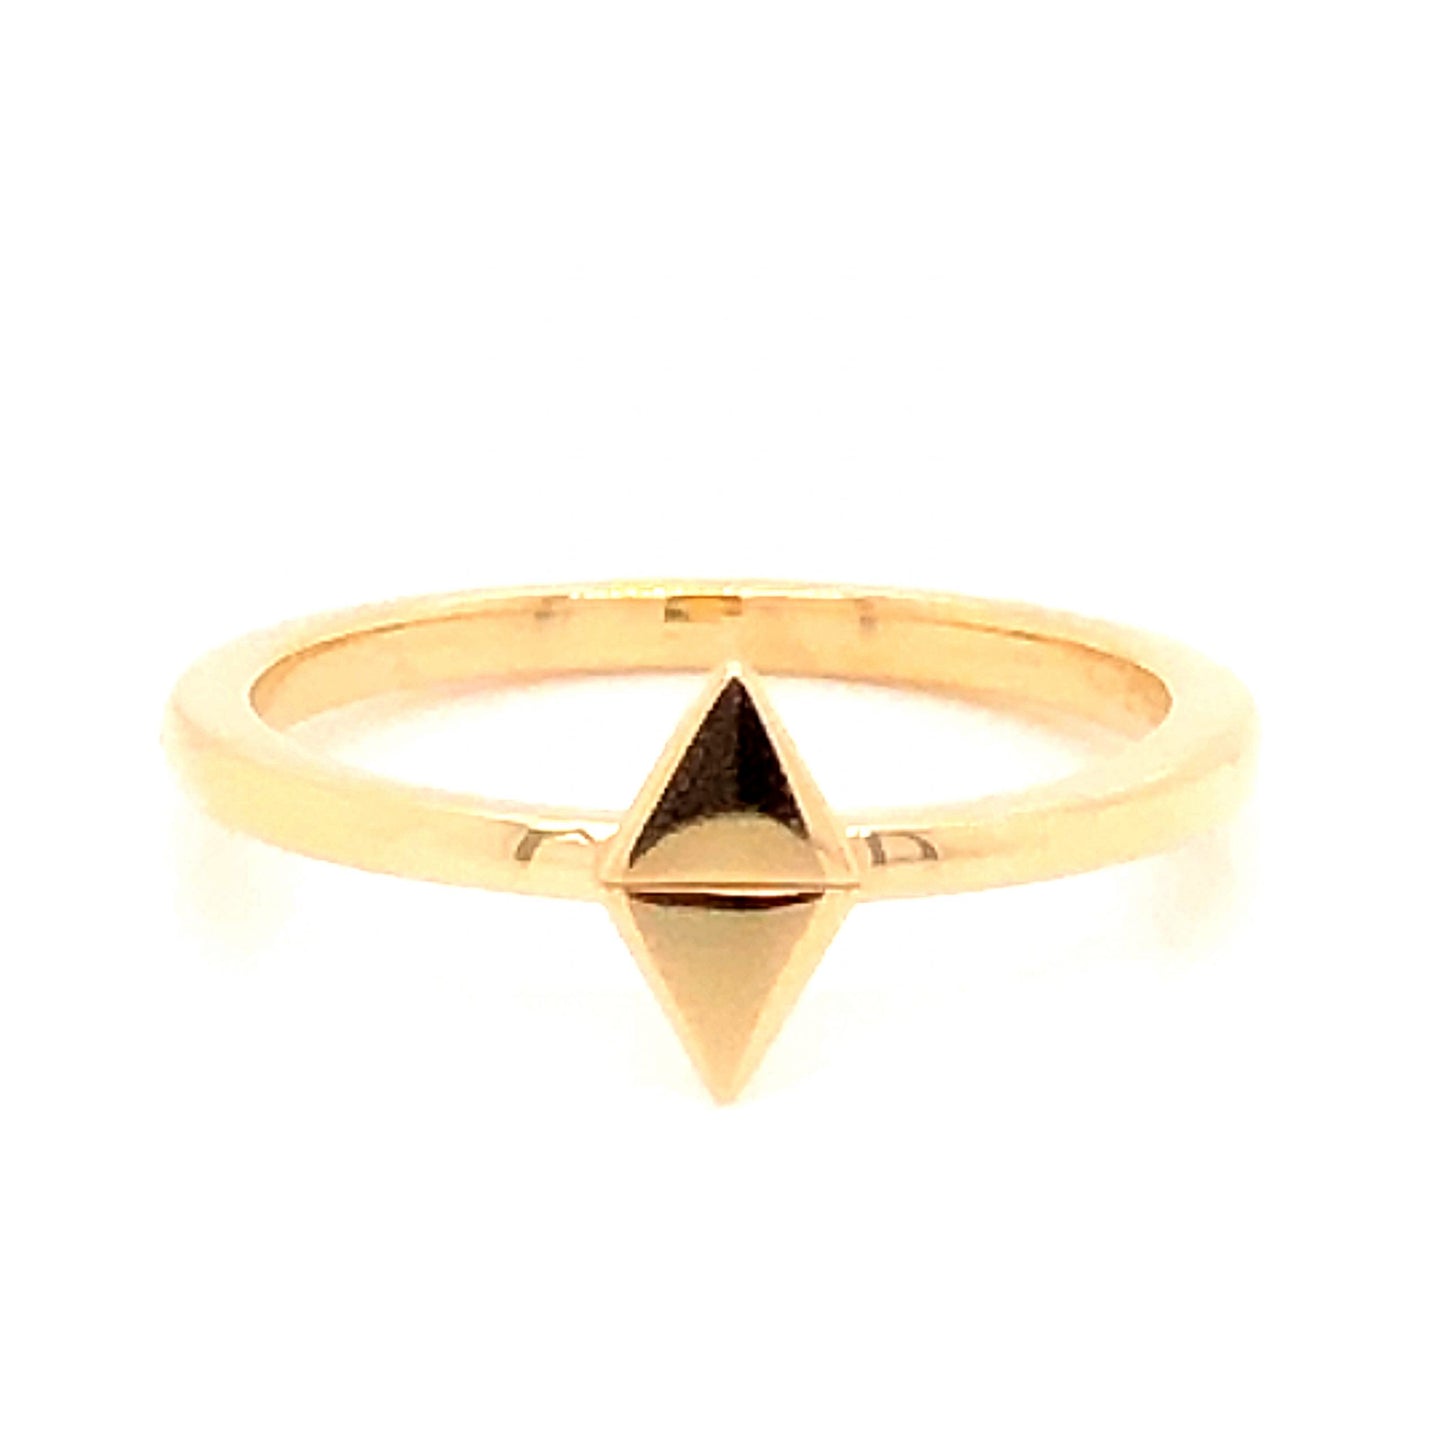 Triangular Stacking Ring in 14k Yellow Gold